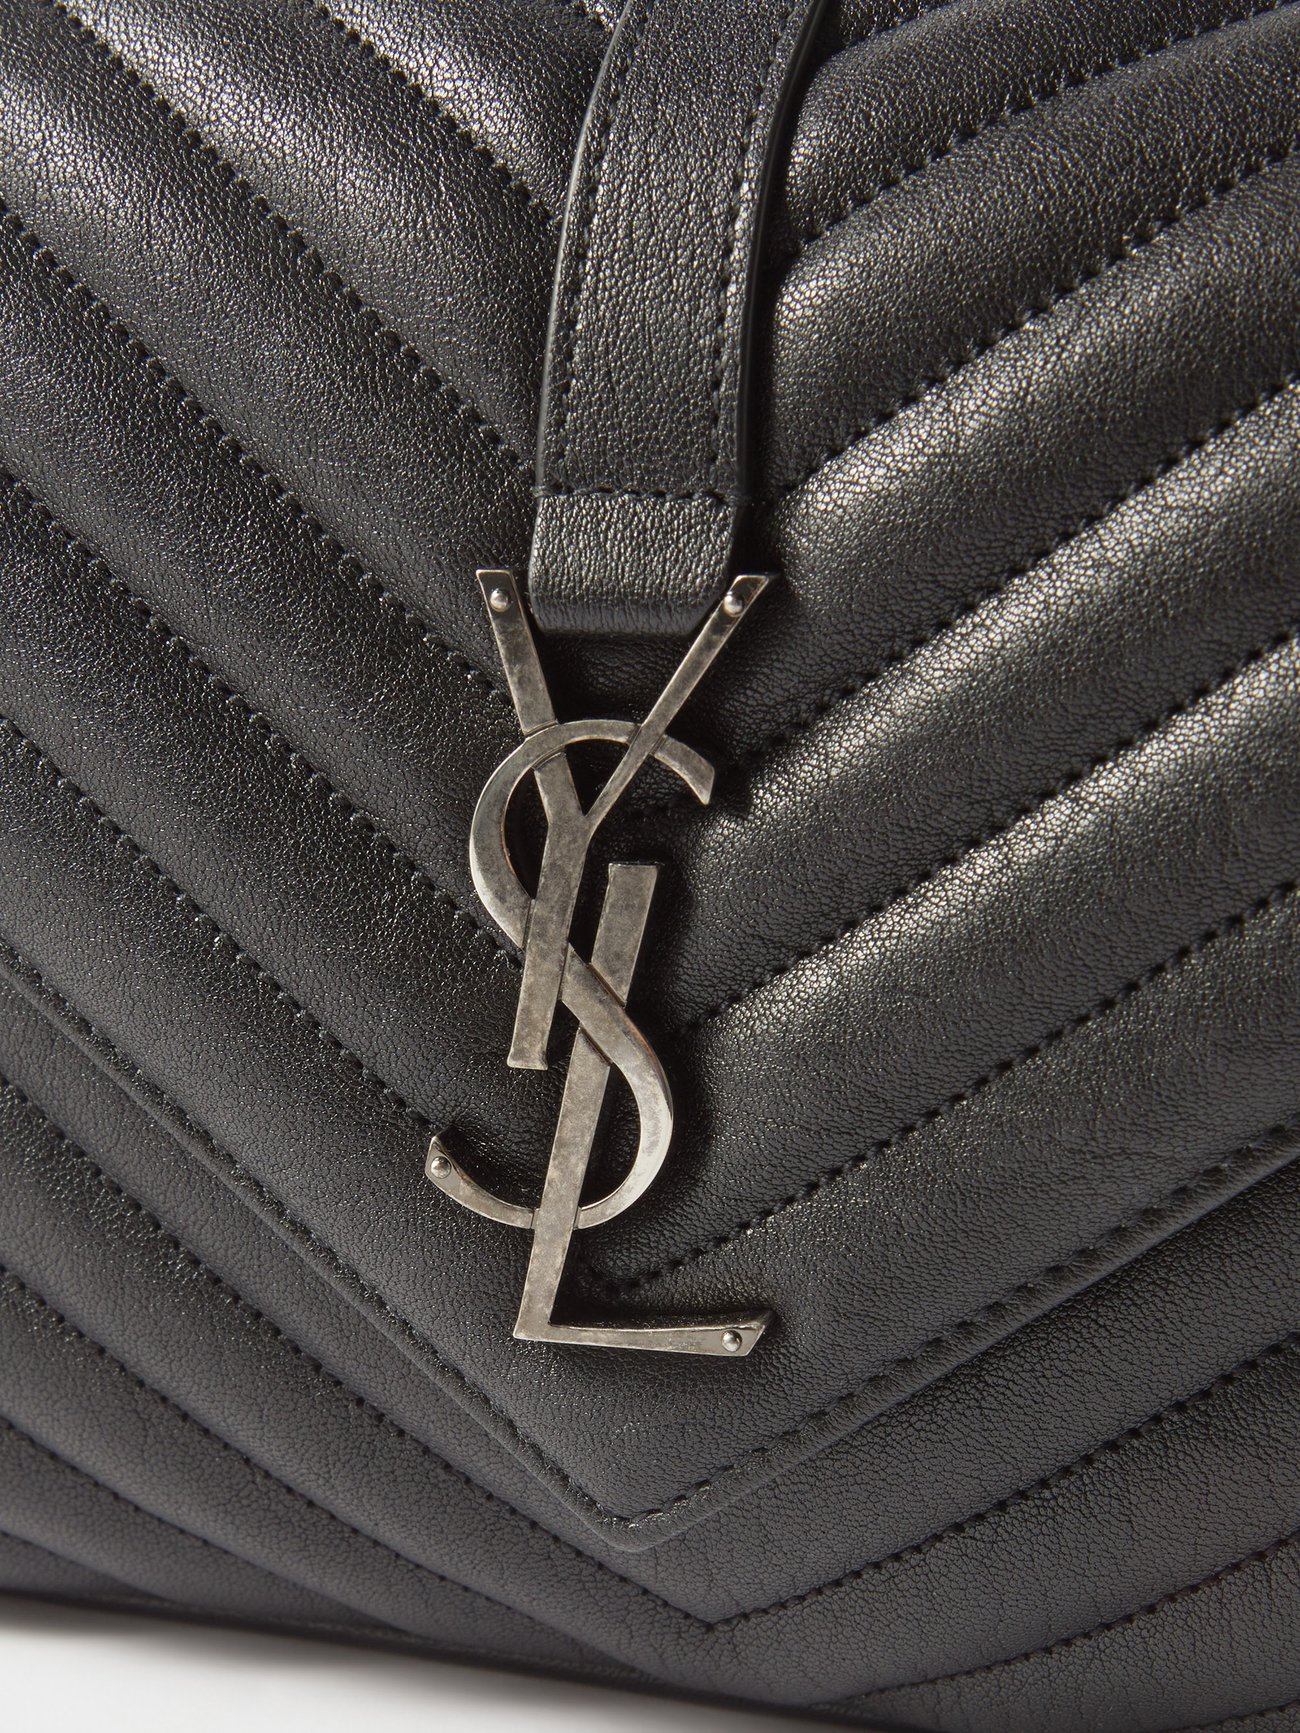 Luxury Handbags YSL Crossbody Black Leather 810-00434 - Mazzarese